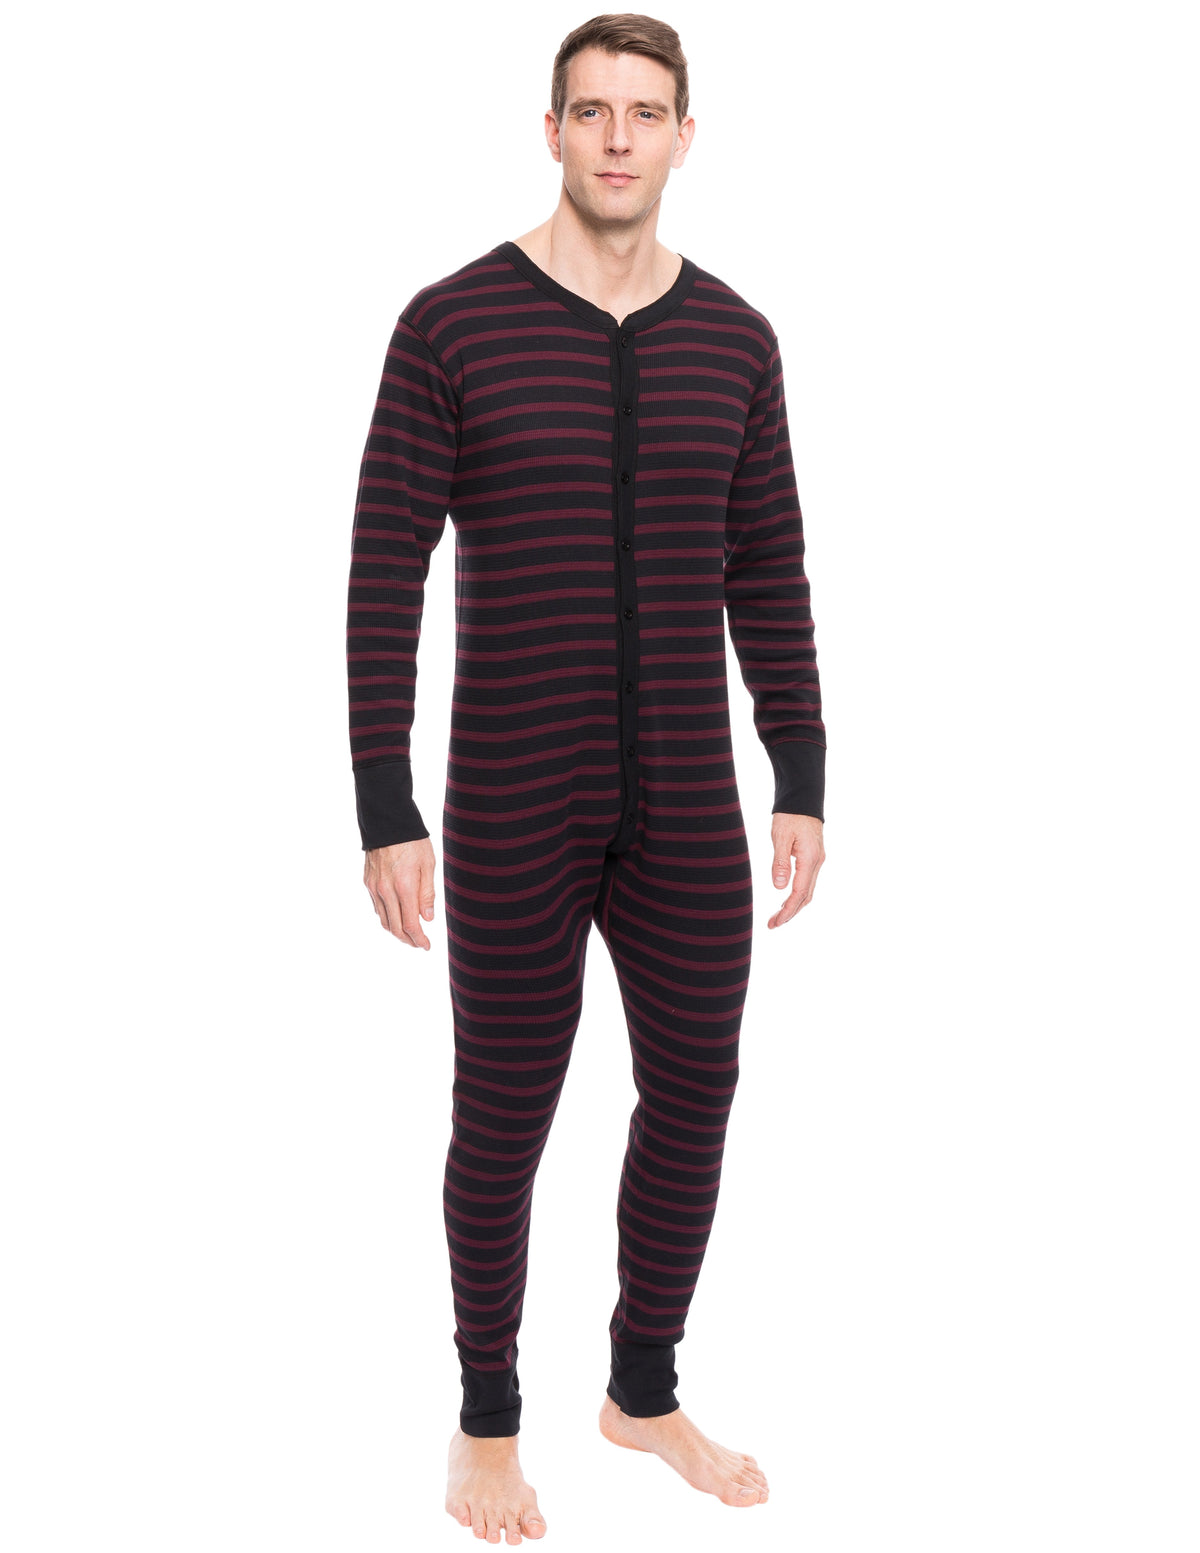 Men's Waffle Knit Thermal Union Suit - Stripes Black/Fig